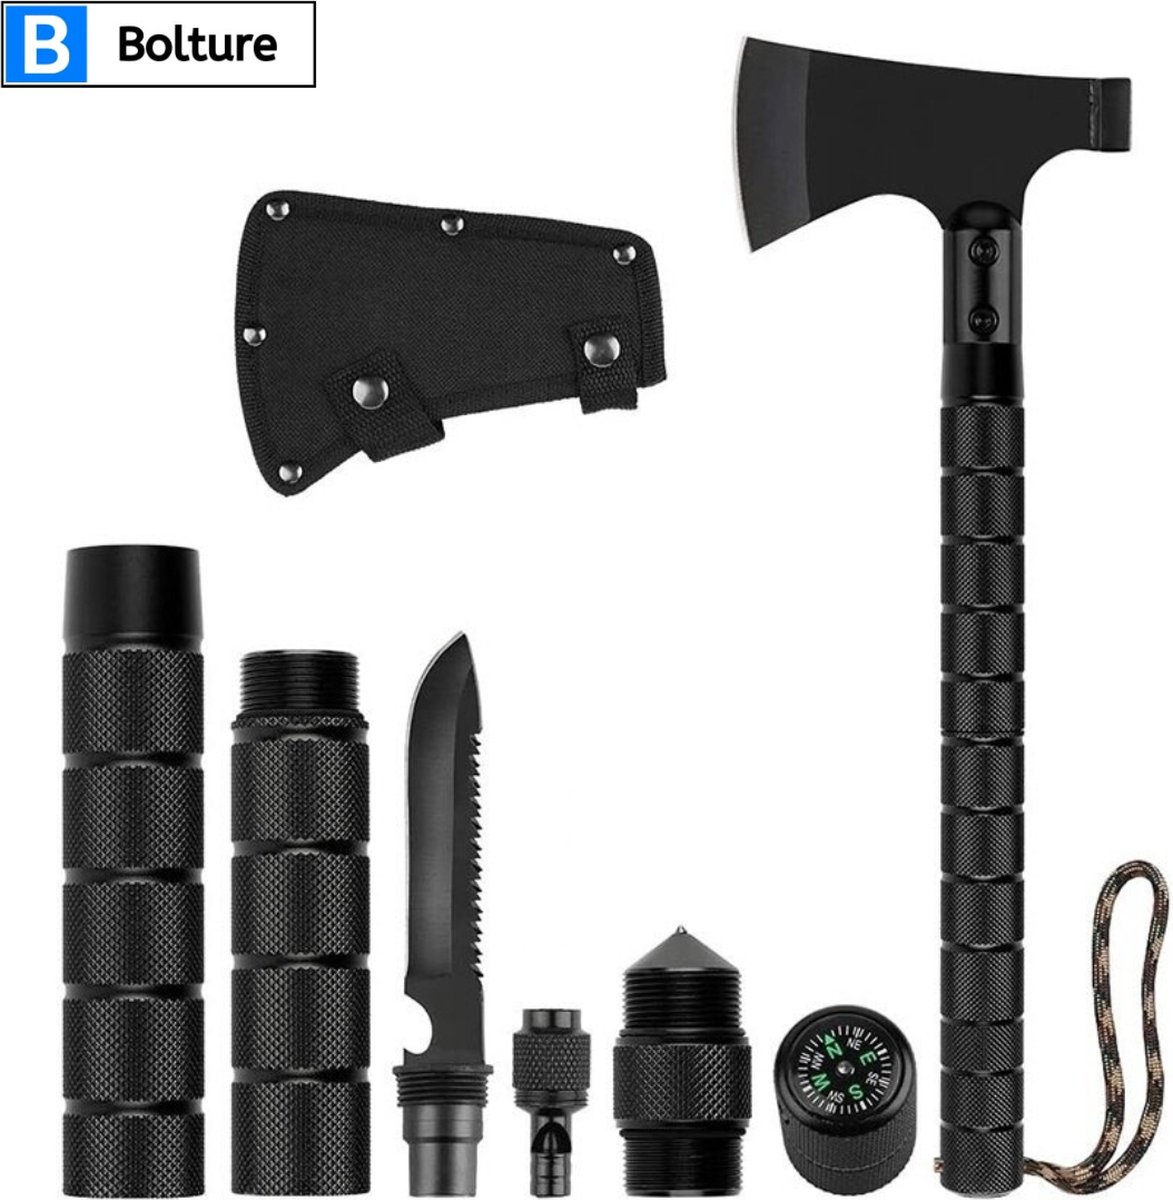 Bolture Survival Kit – Survival Mes - Bijl – Kloofbijl - Hamer - Fluitje - Zakmes – Kompas - Meerdere Accessoires Inbegrepen - 1 KG